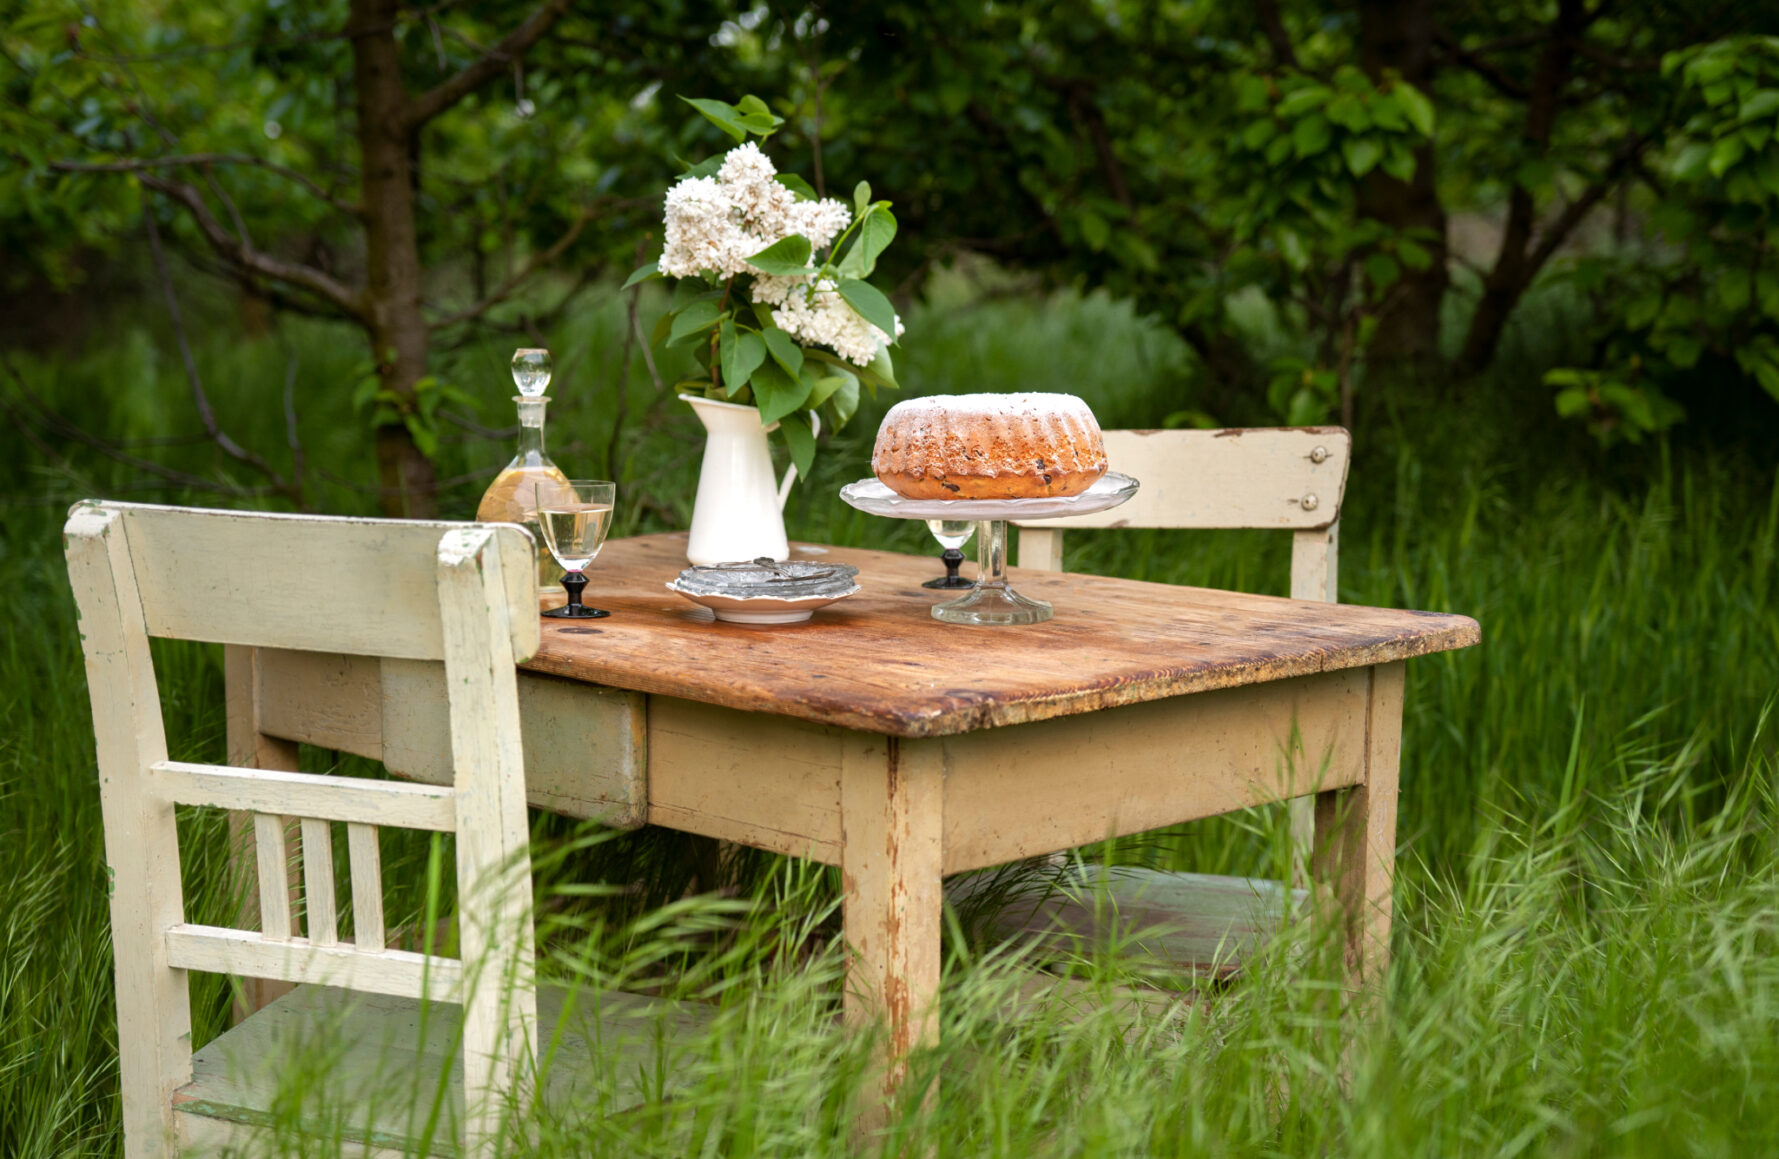 Best Outdoor Tables: Simple looking